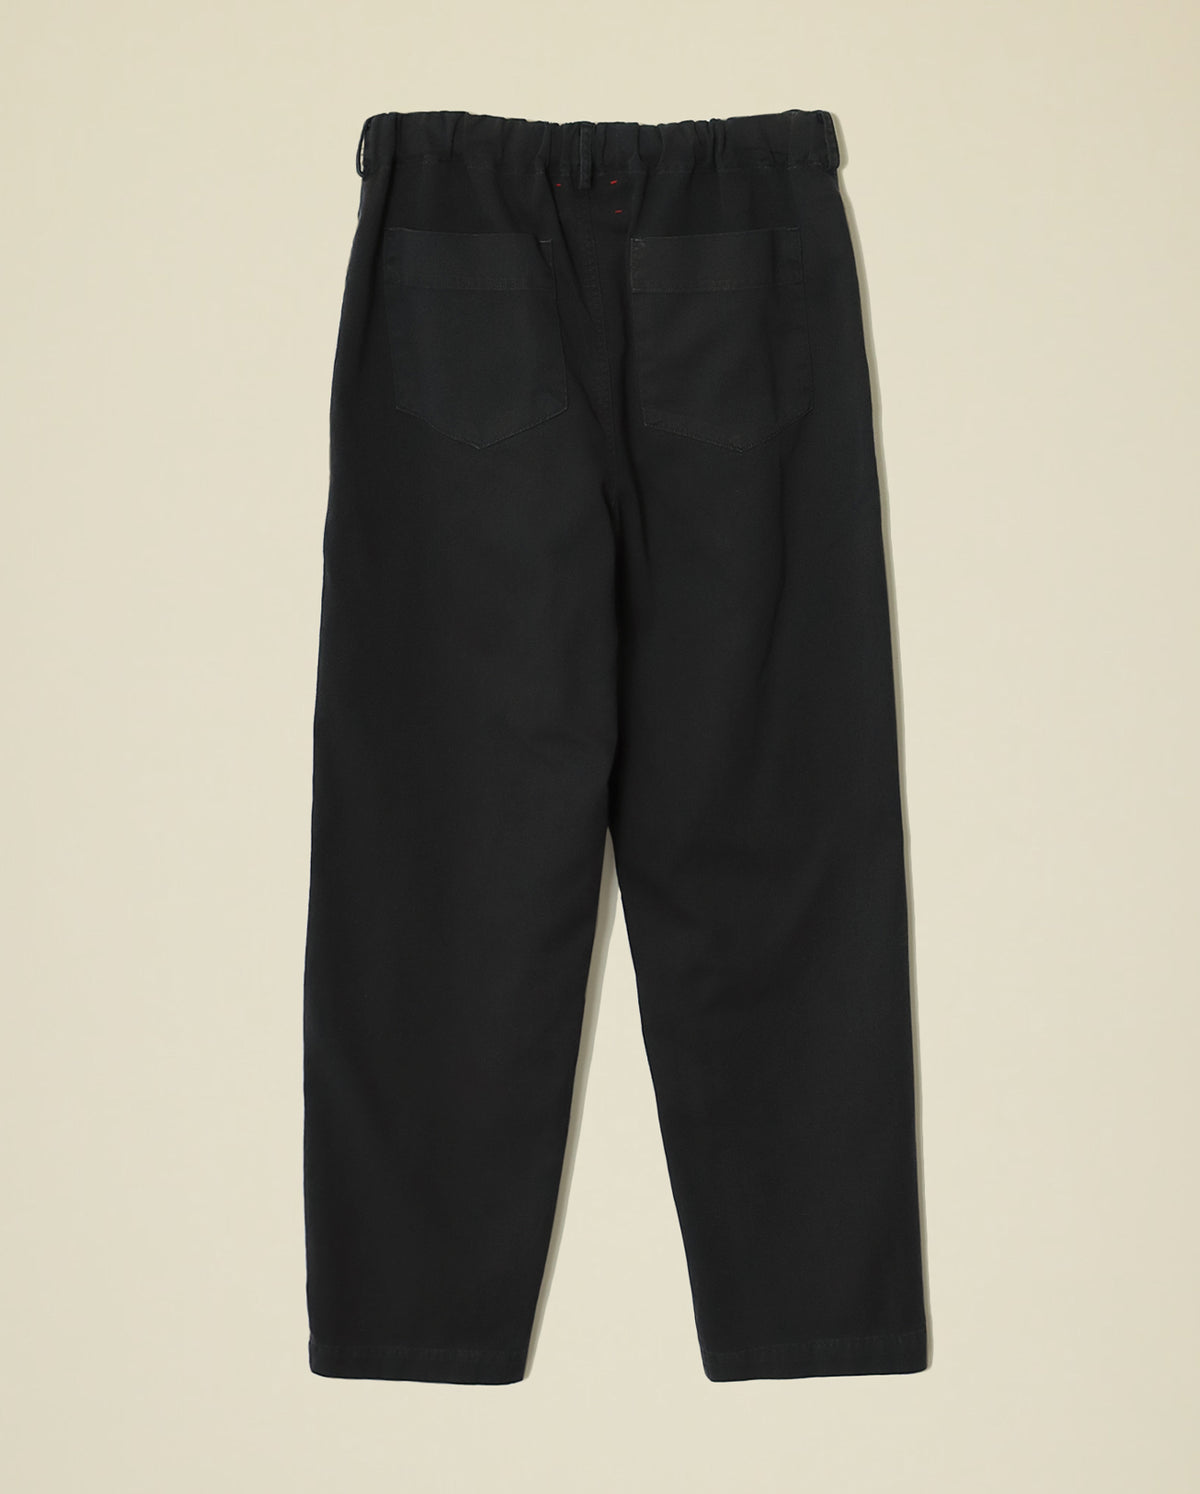 Mercer Pant - Vintage Black